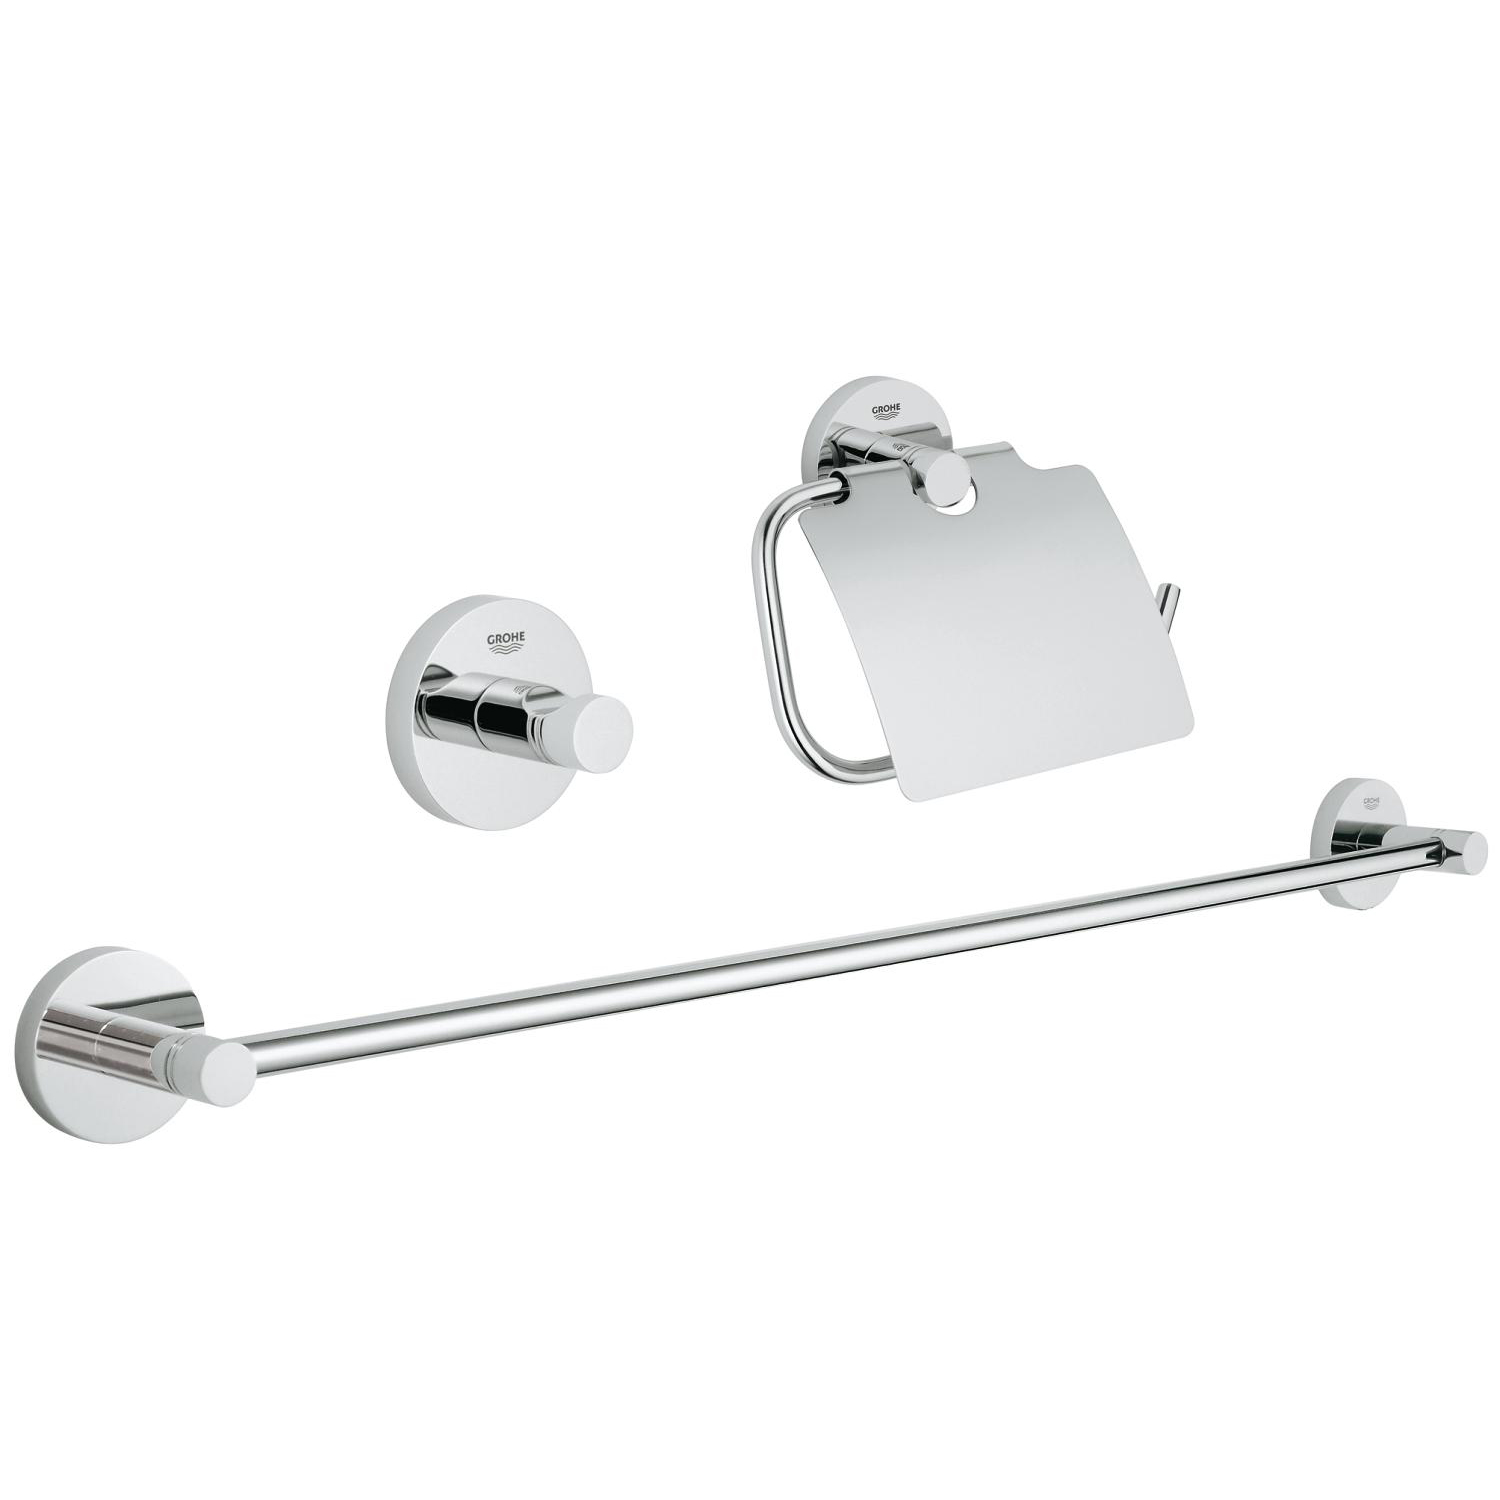 Essentials 3-in-1 Bathroom Accessory Set in StarLight Chrome